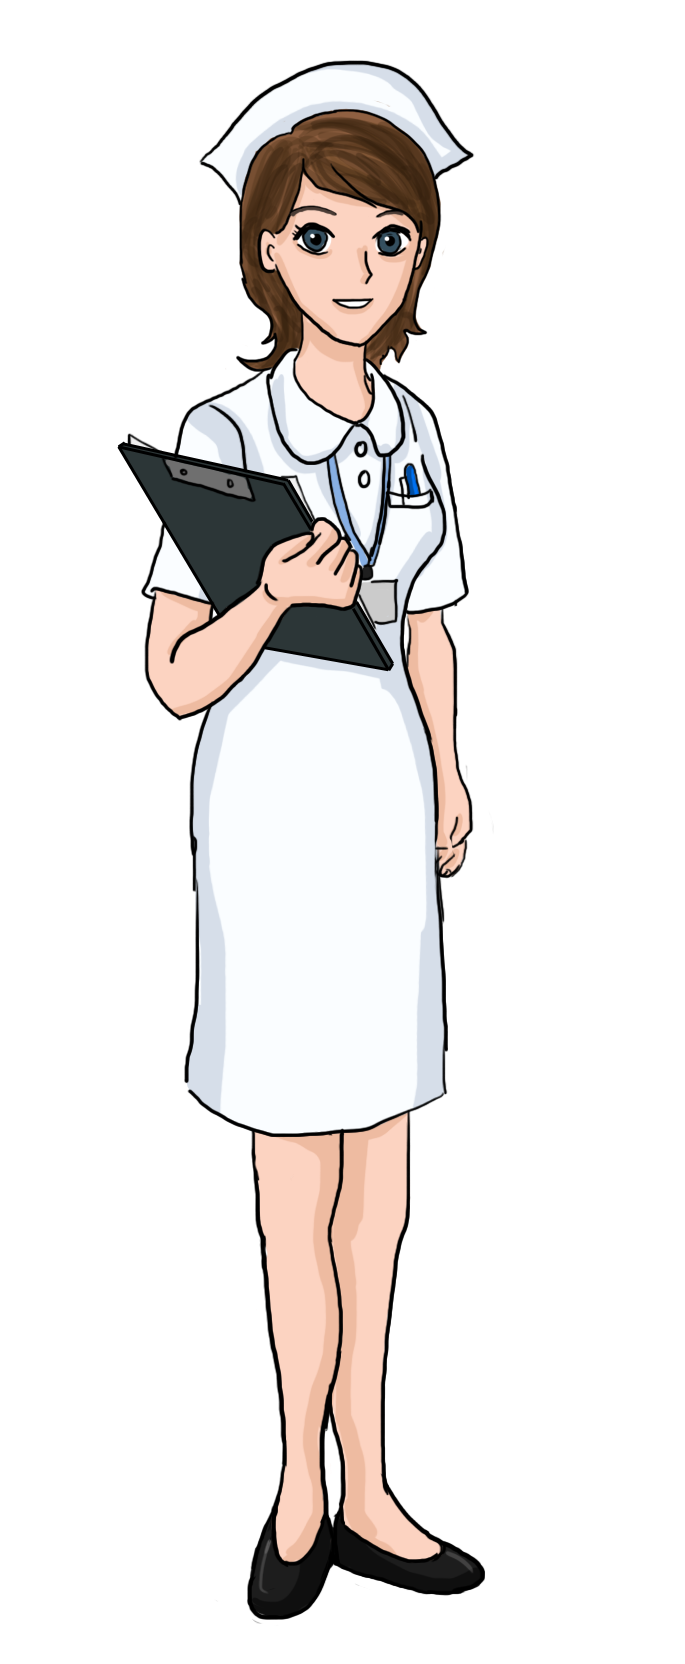 Cartoon pictures of nurses clipart